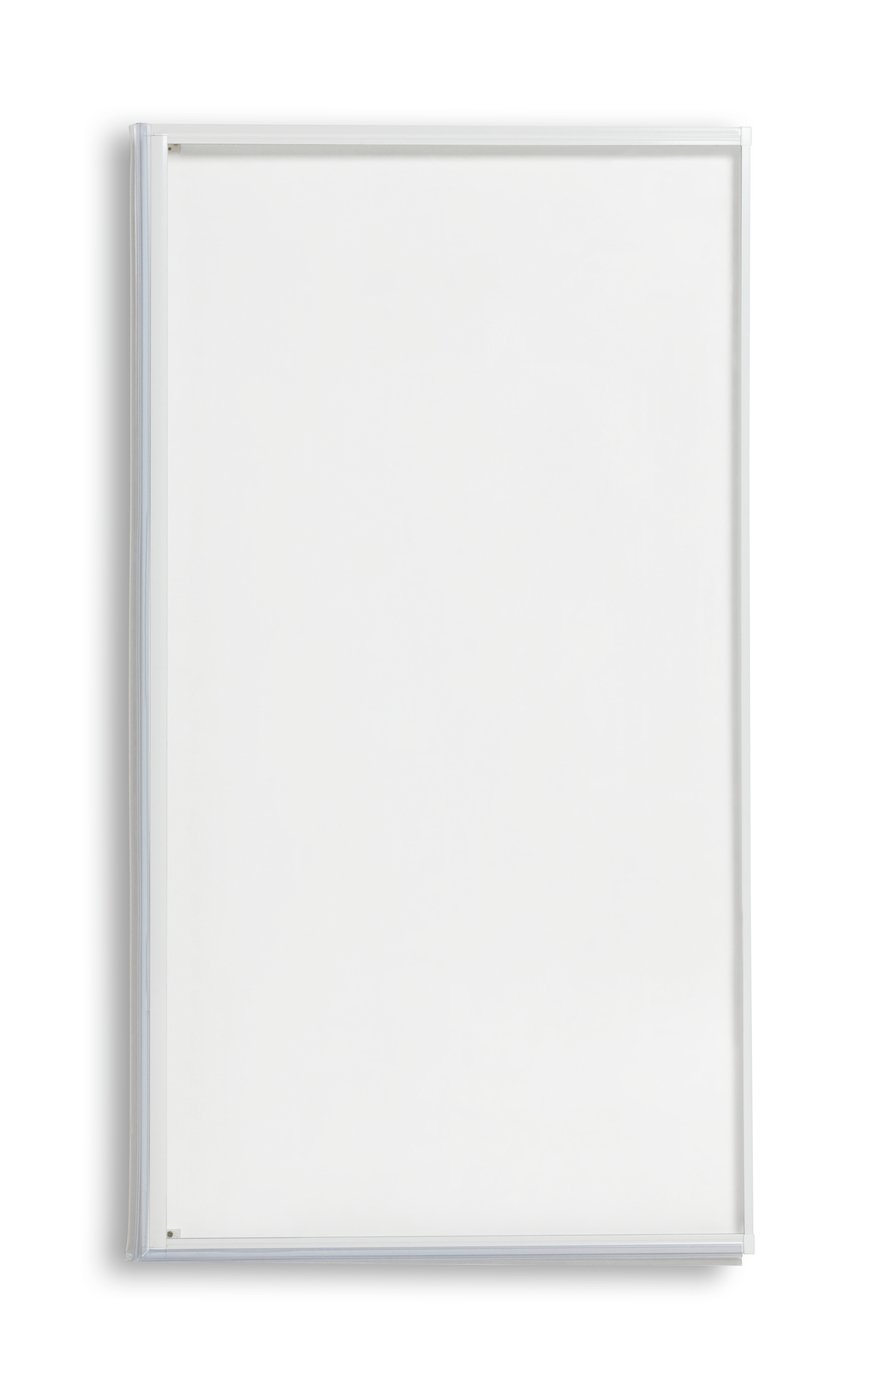 Argos Home 3mm Framed Bath Screen - White